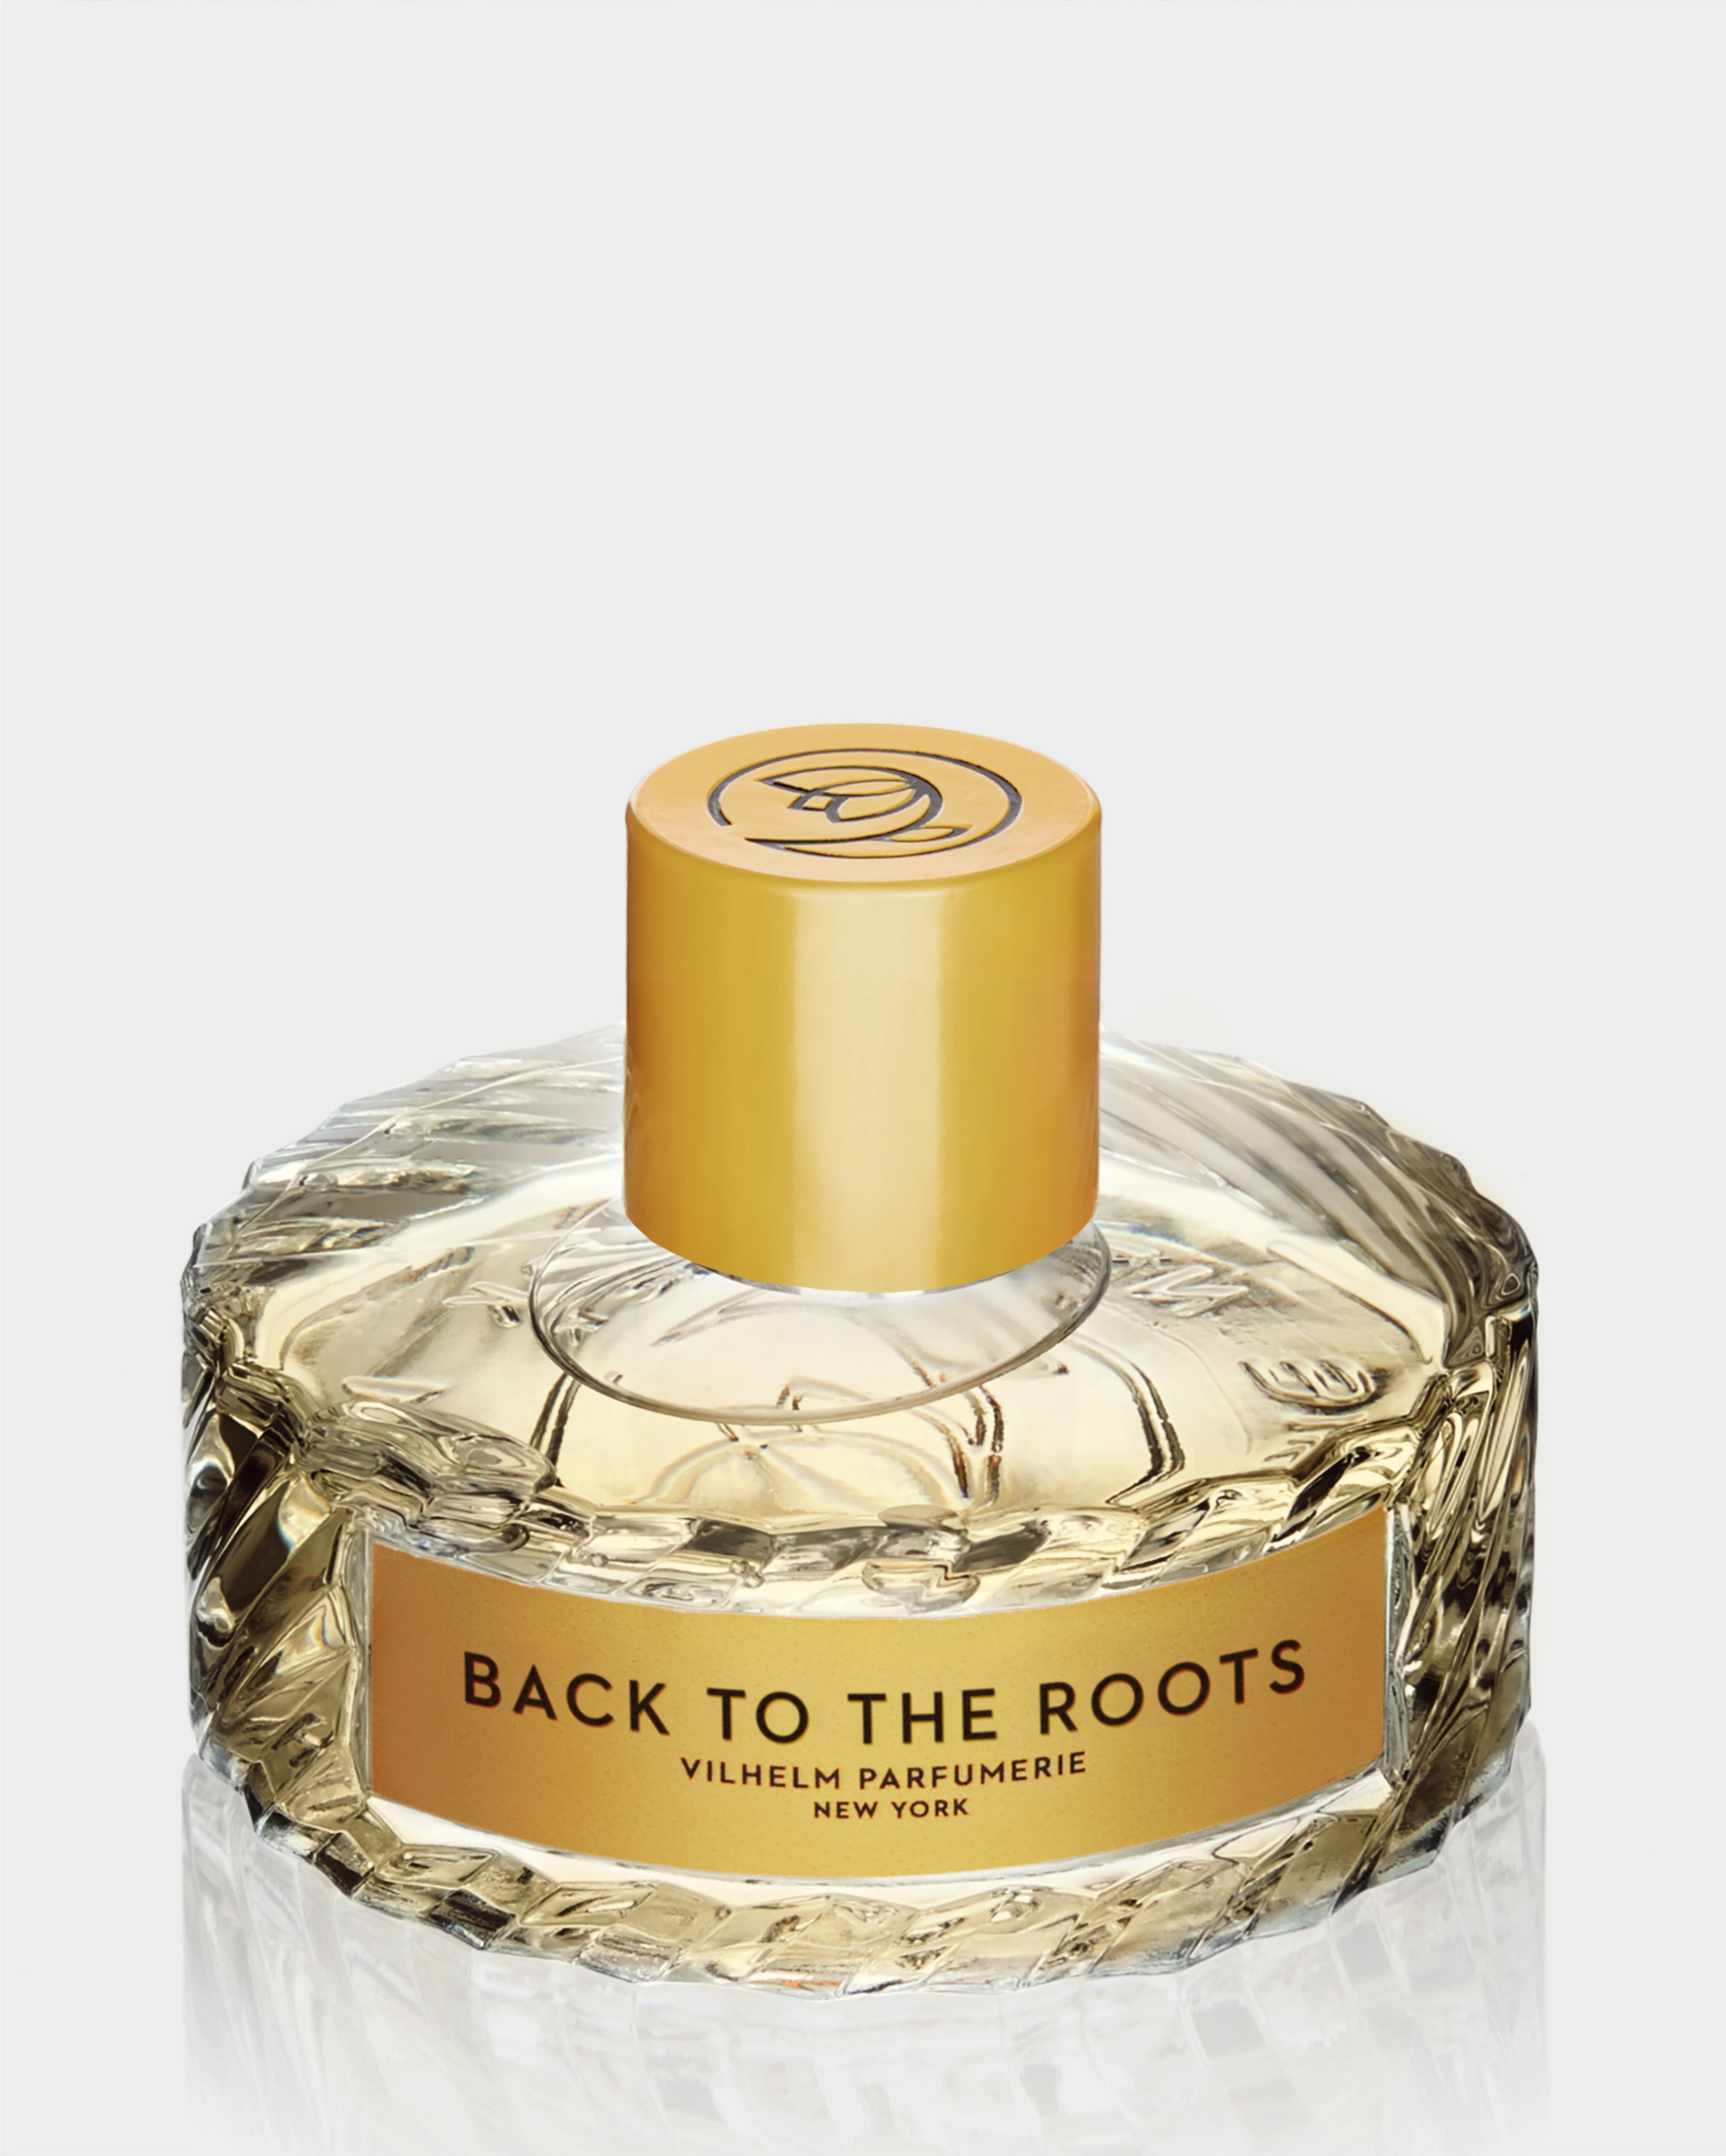 BACK TO THE ROOTS - Vilhelm Parfumerie